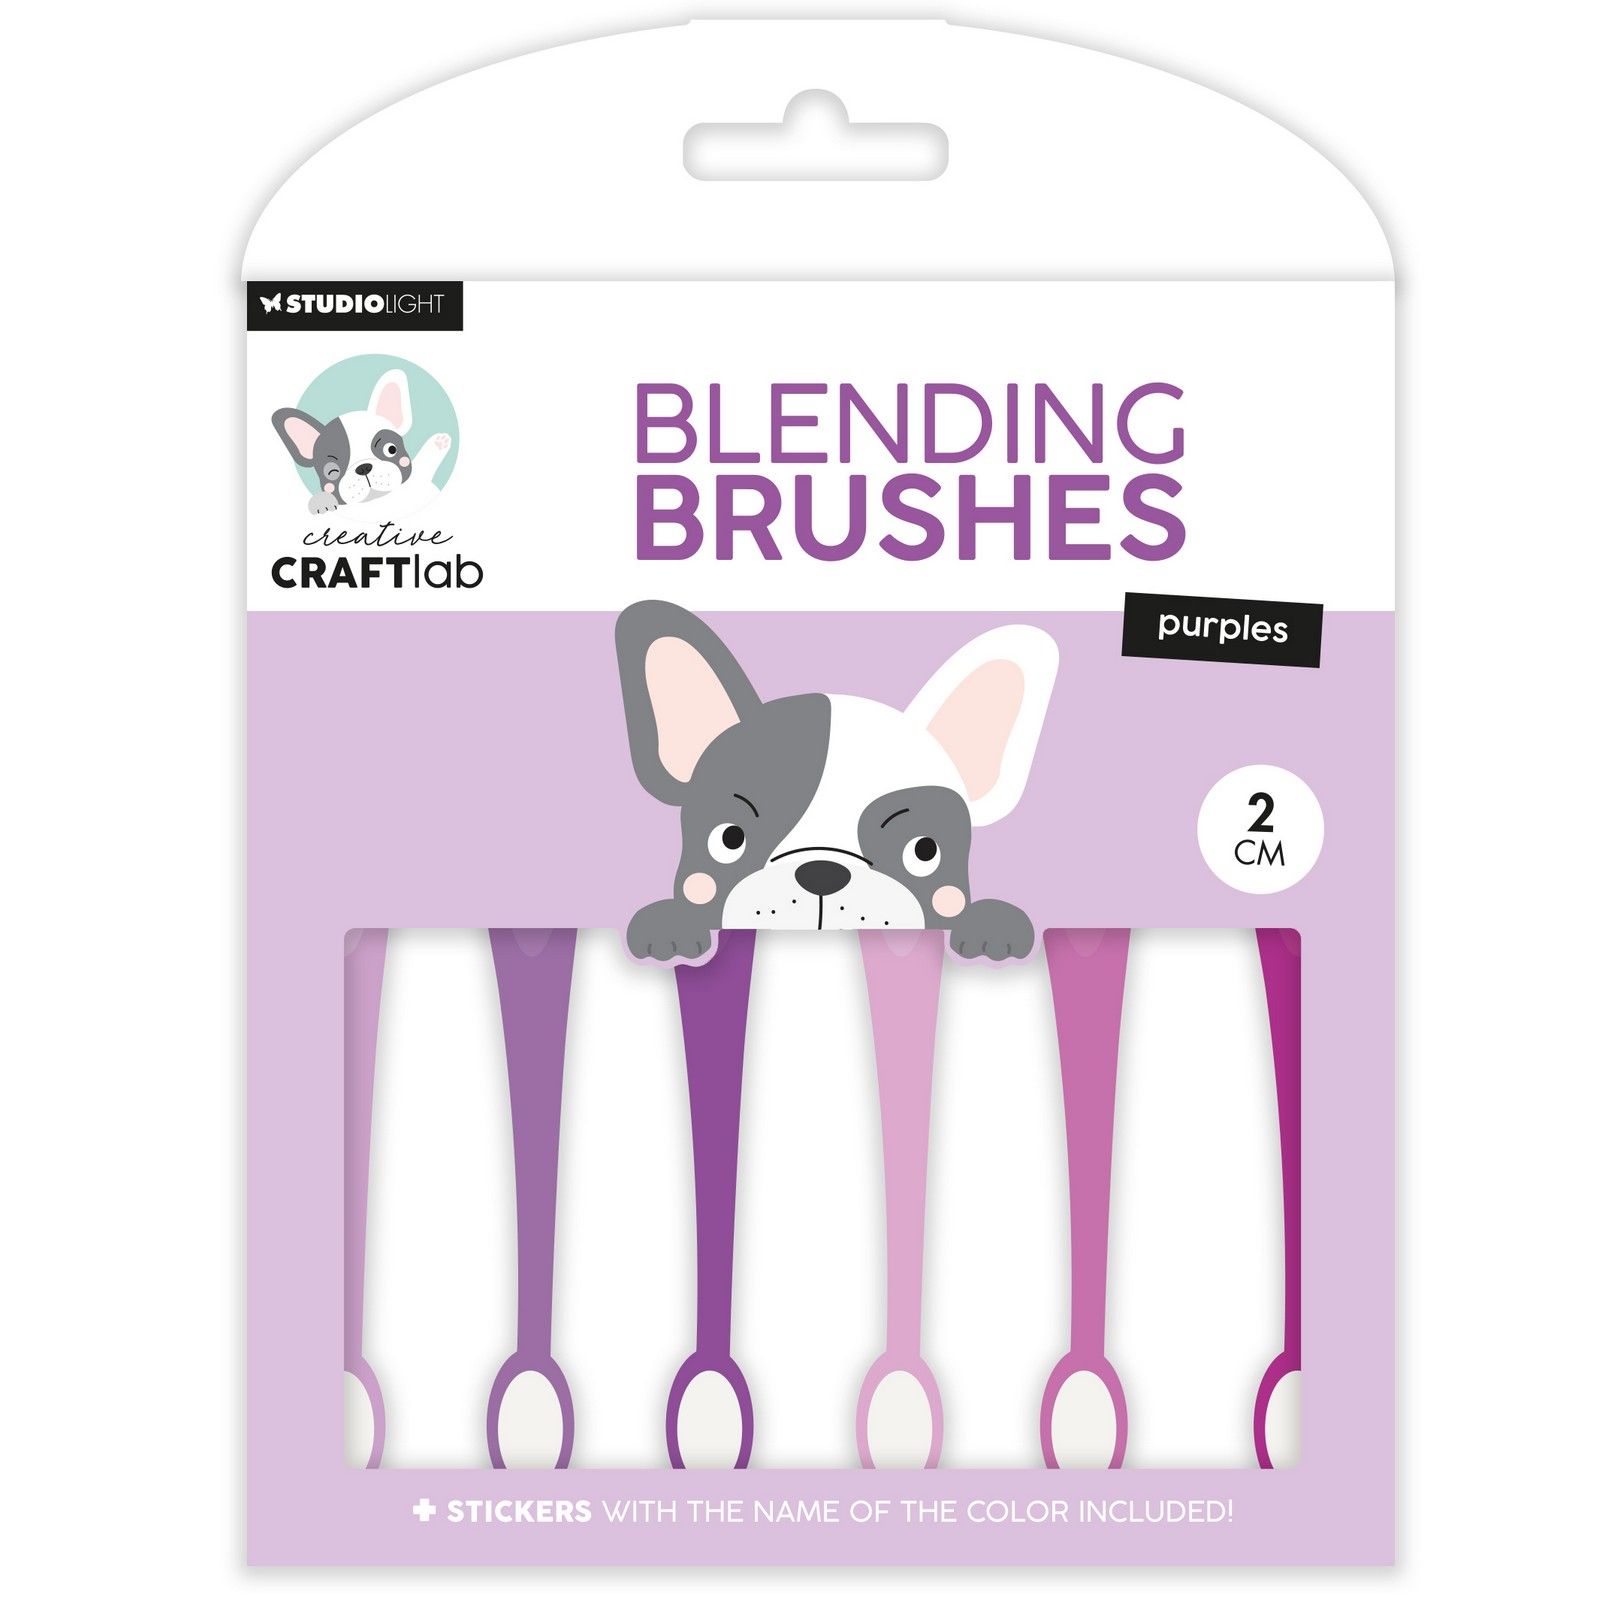 Creative Craftlab • Essentials Blending Brushes 2cm Soft Brush Purples